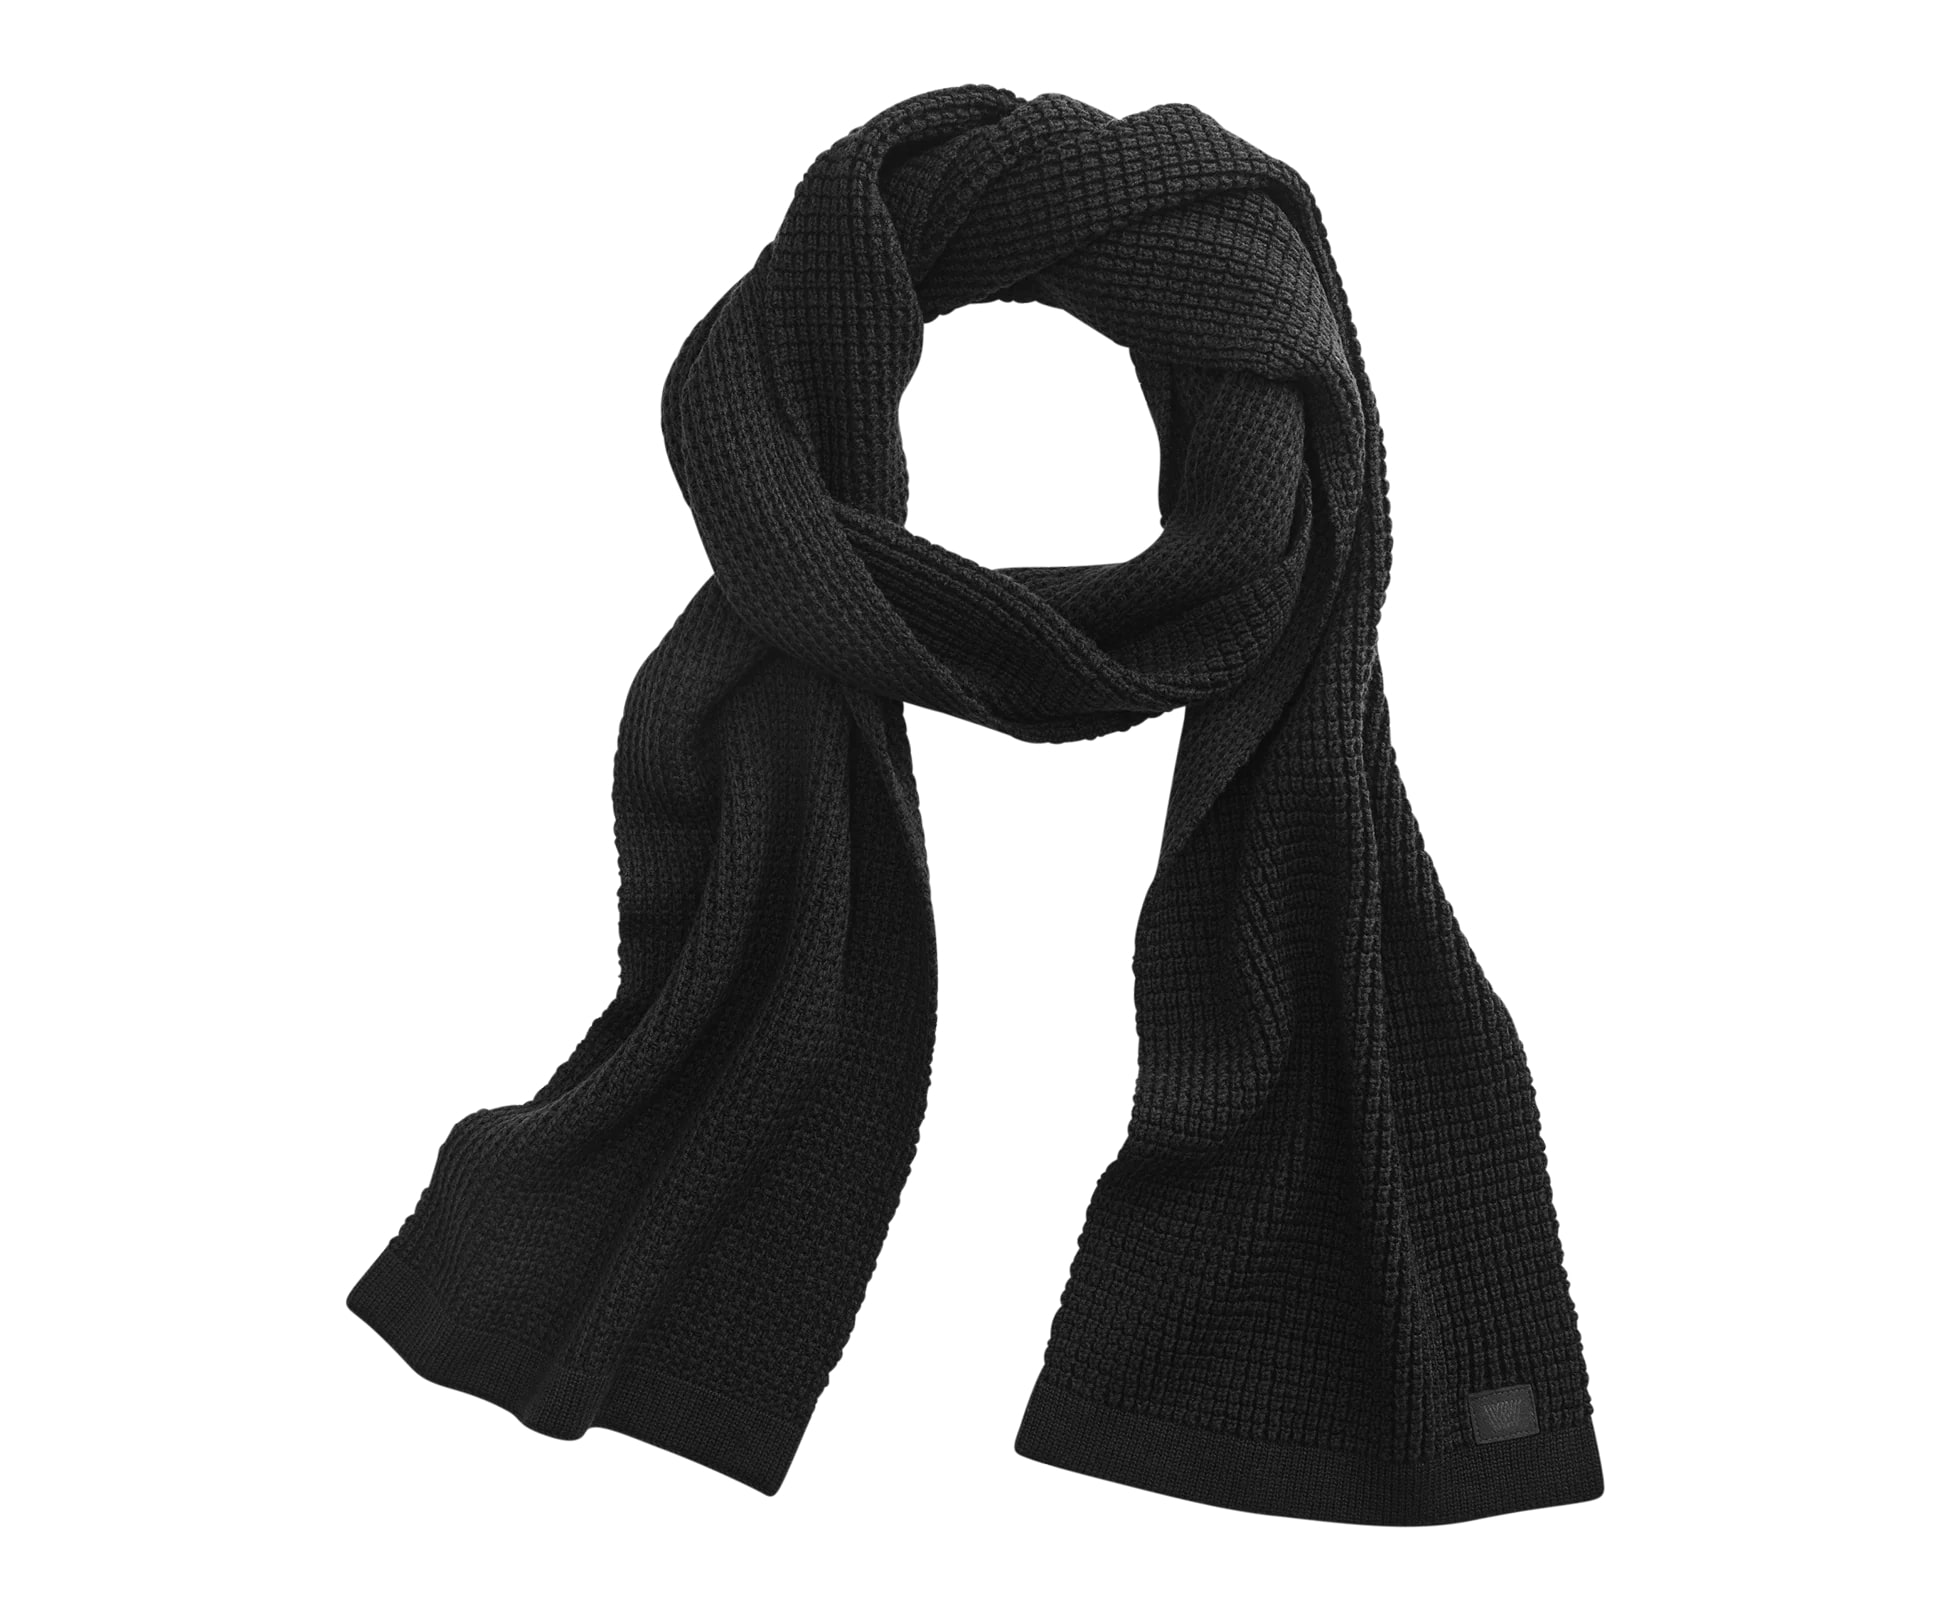 Mack Weldon wool scarf in true black with waffle stitch